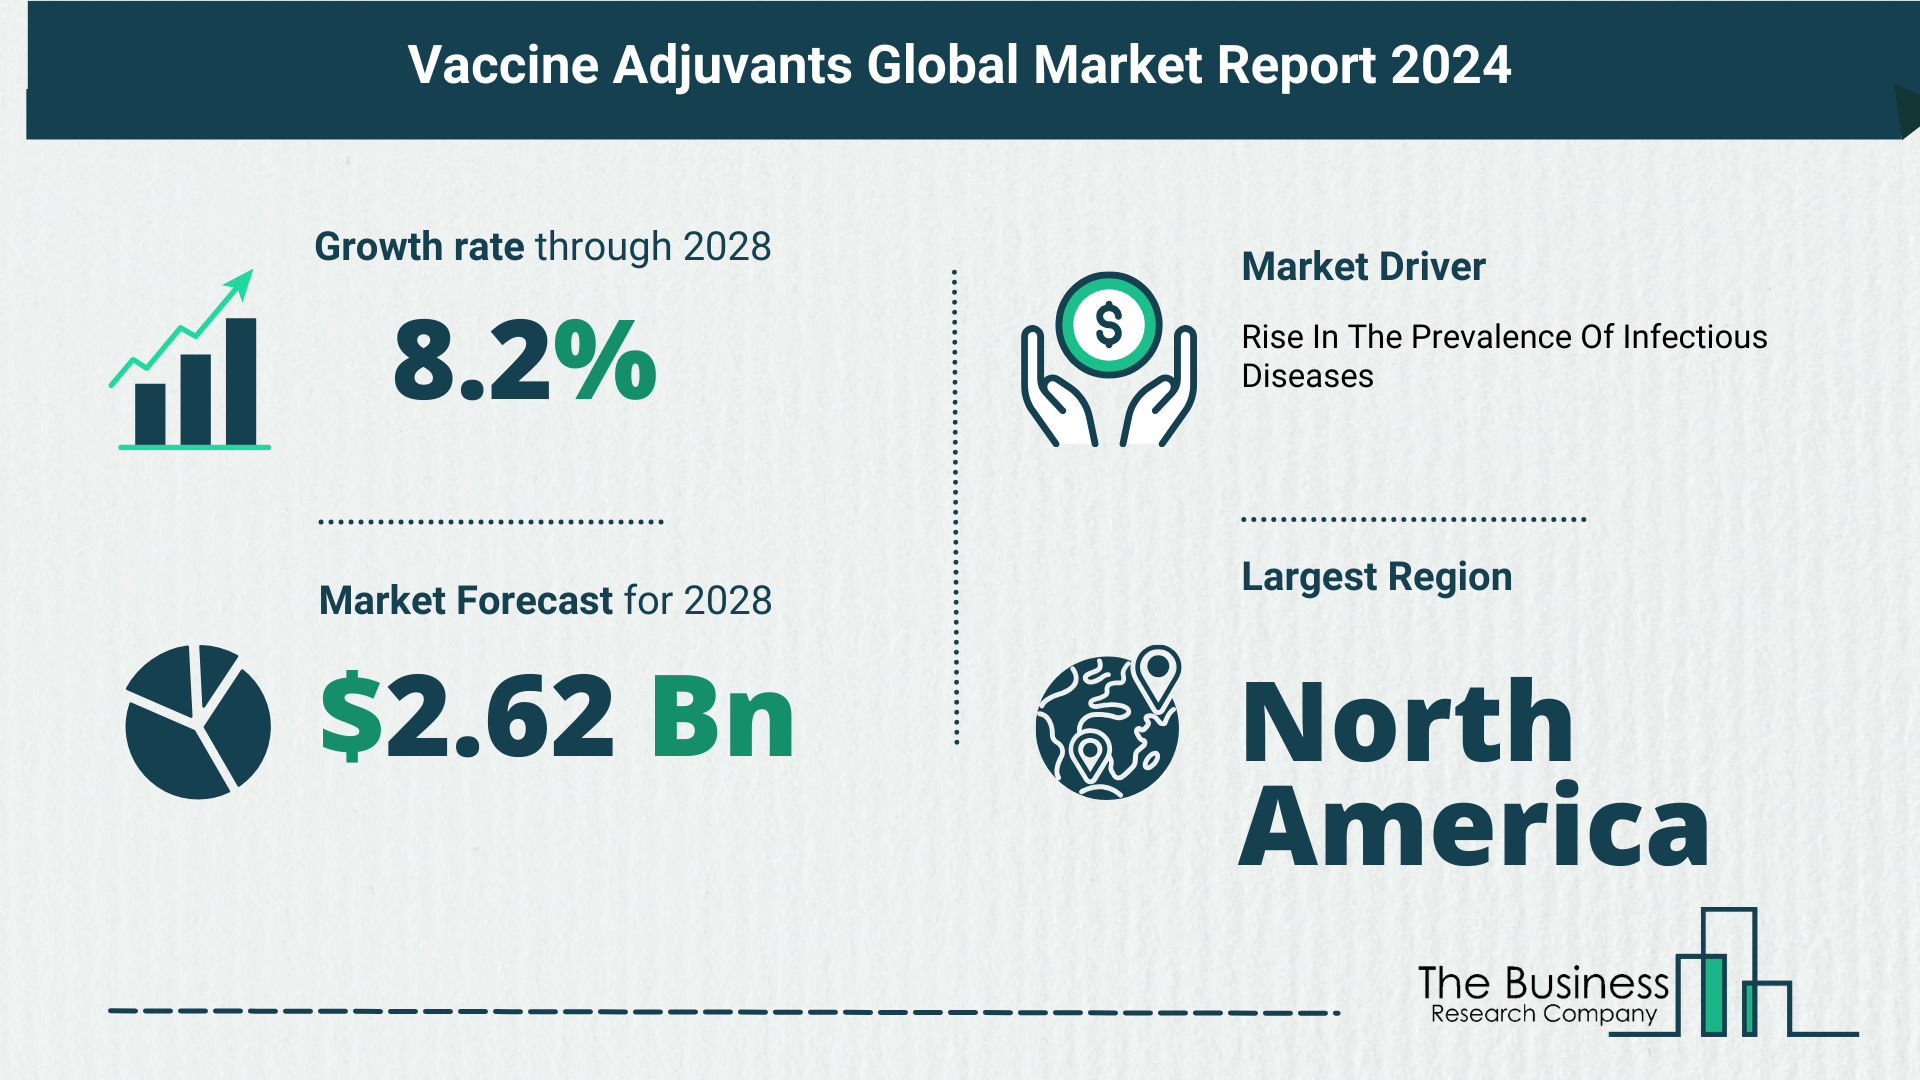 Vaccine Adjuvants Market Forecast 2024: Forecast Market Size, Drivers And Key Segments